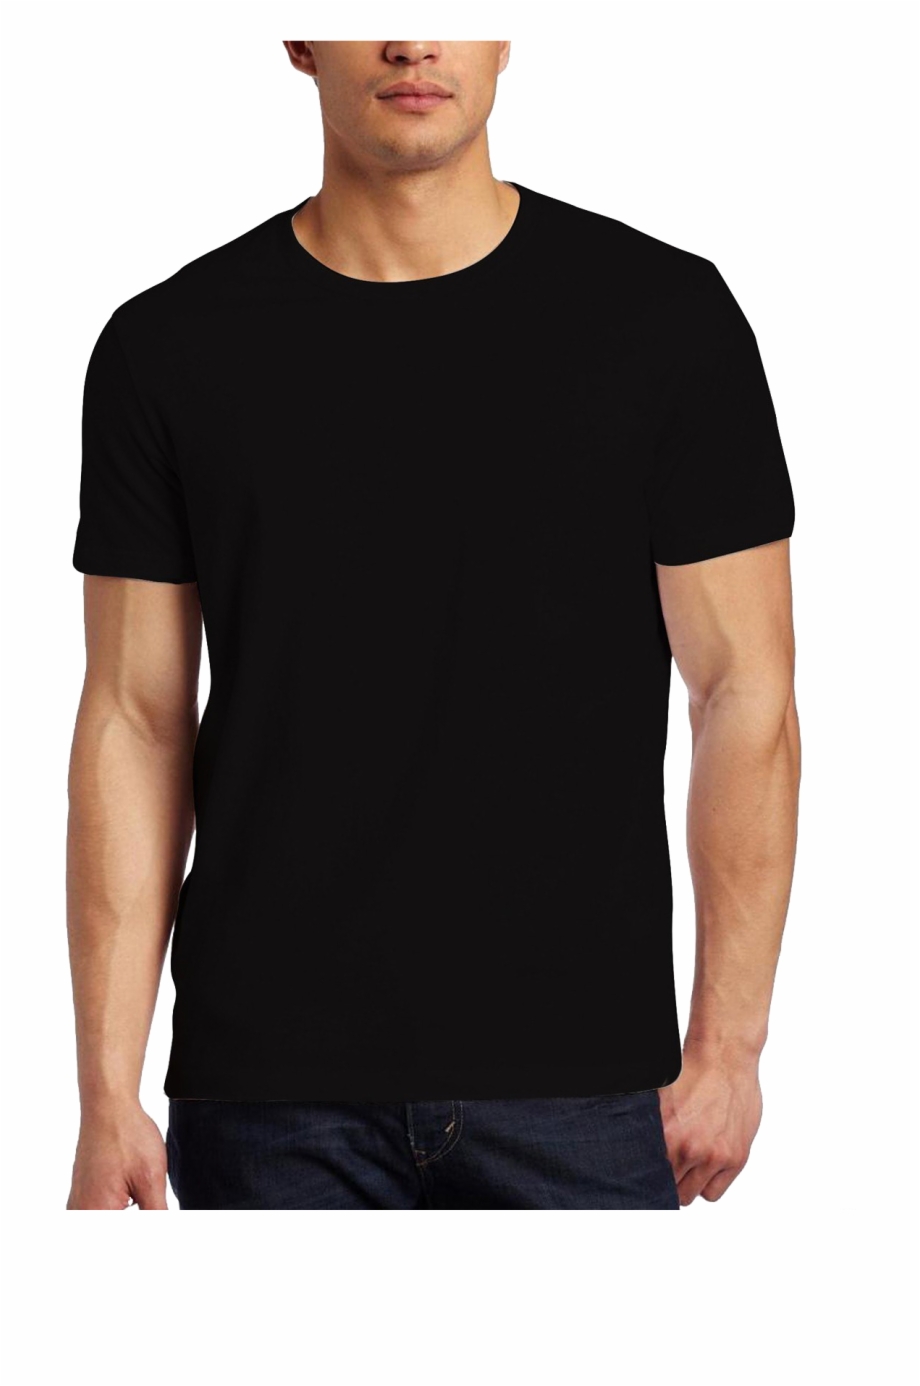 Black T Shirt Template Png Png Stock Com - free roblox shirt pants and tshirt templates mens armani jeans polo shirt hd png download vhv